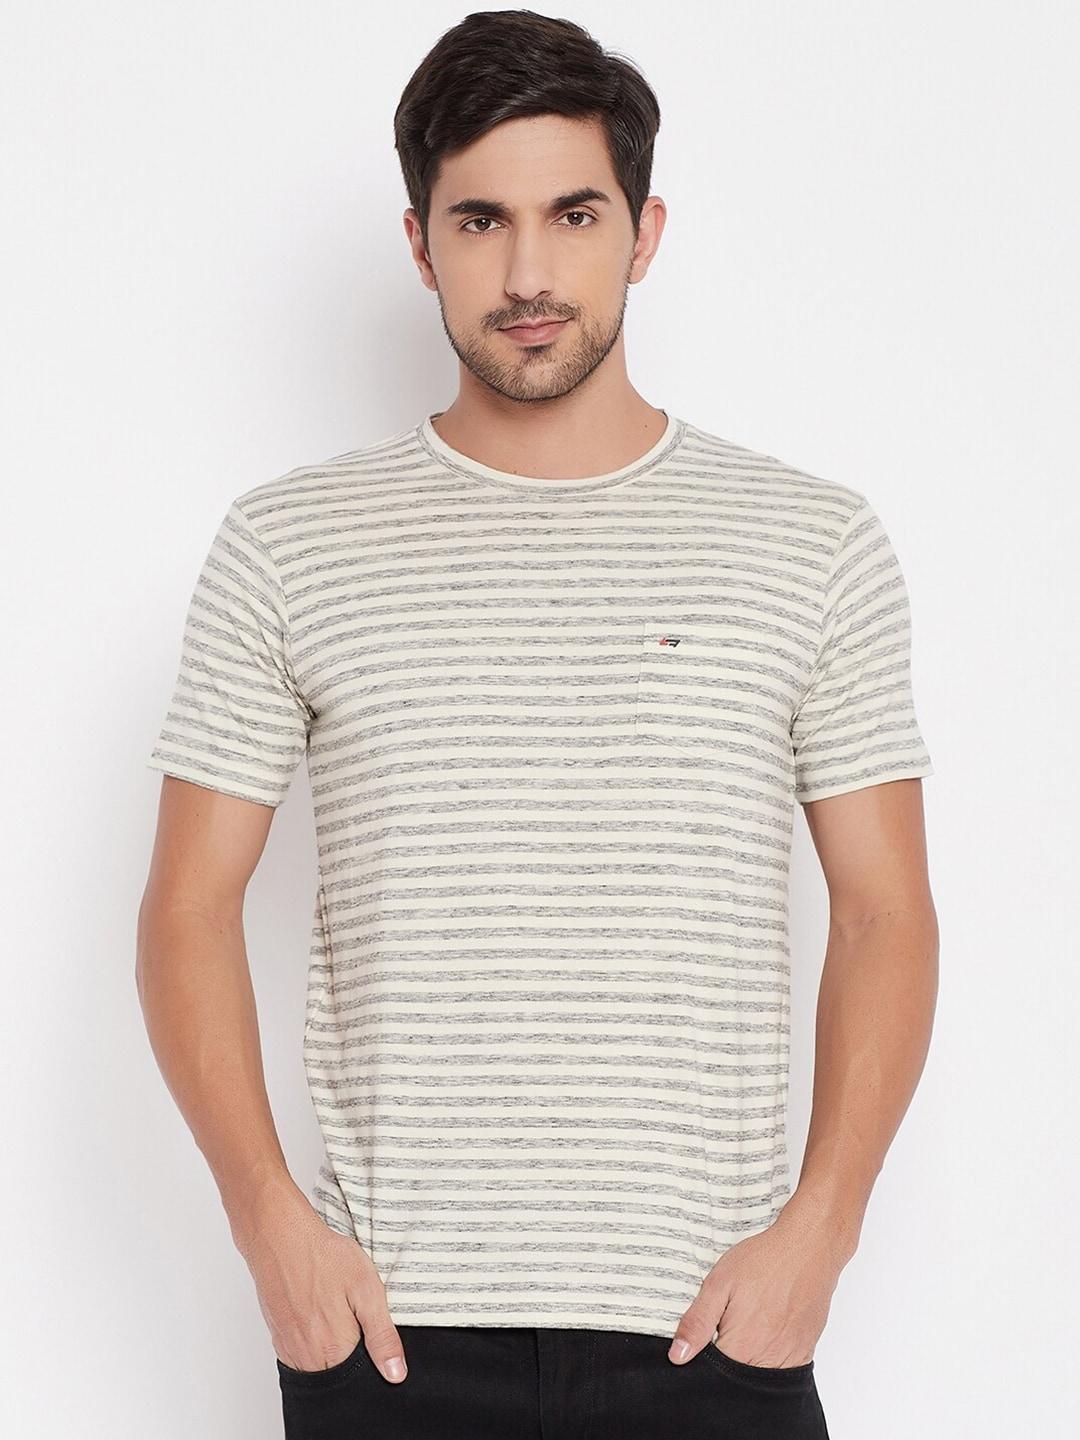 neva men beige & black striped cotton t-shirt